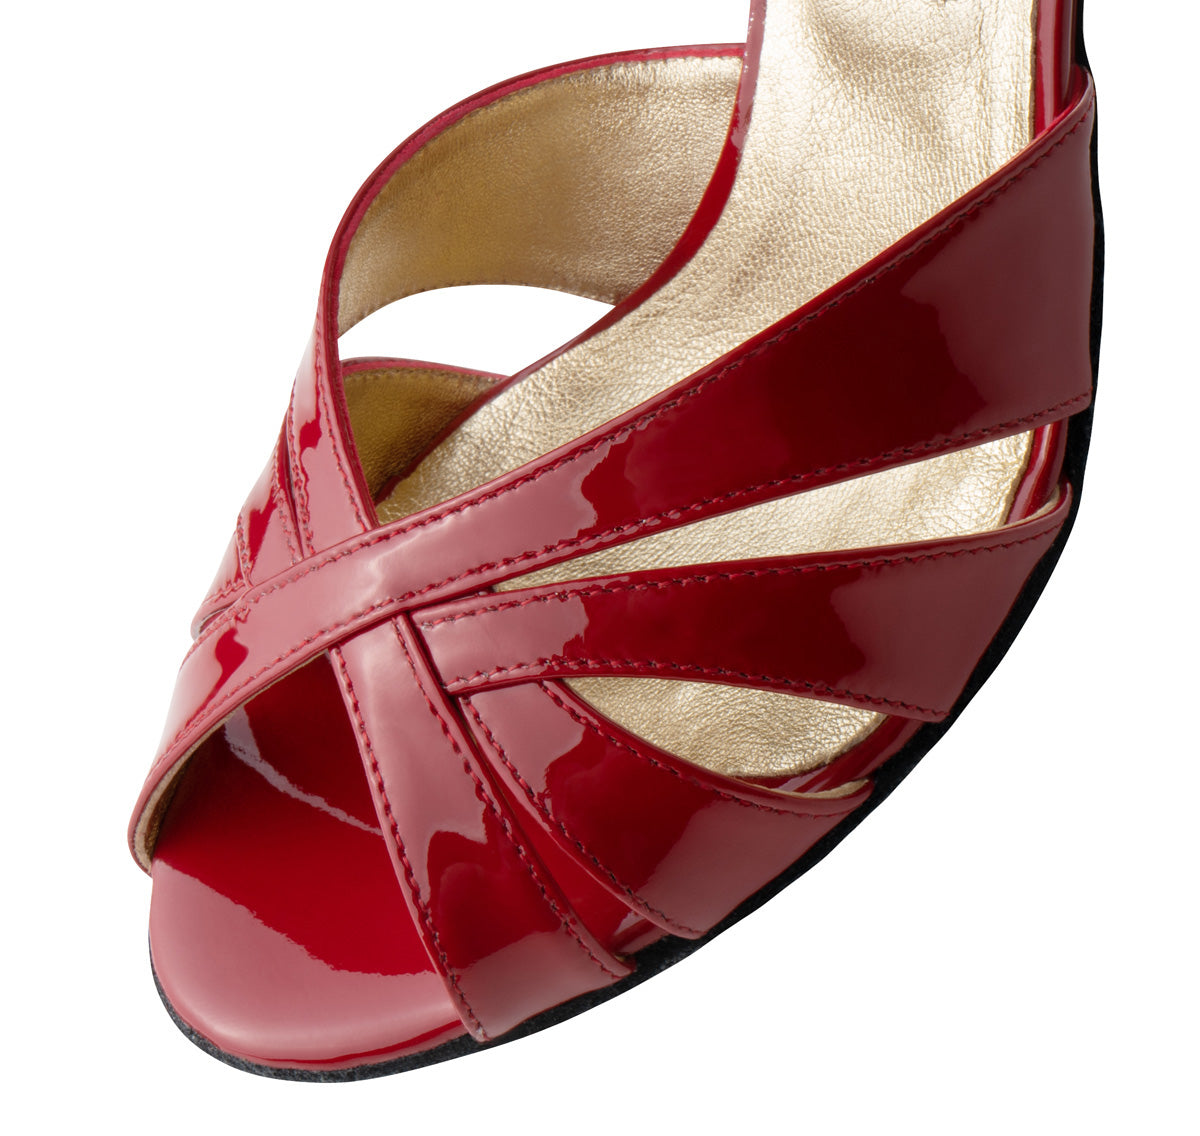 Werner Kern Adora Ladies Open Toe Red Patent Leather Salsa Tango Dance Shoe